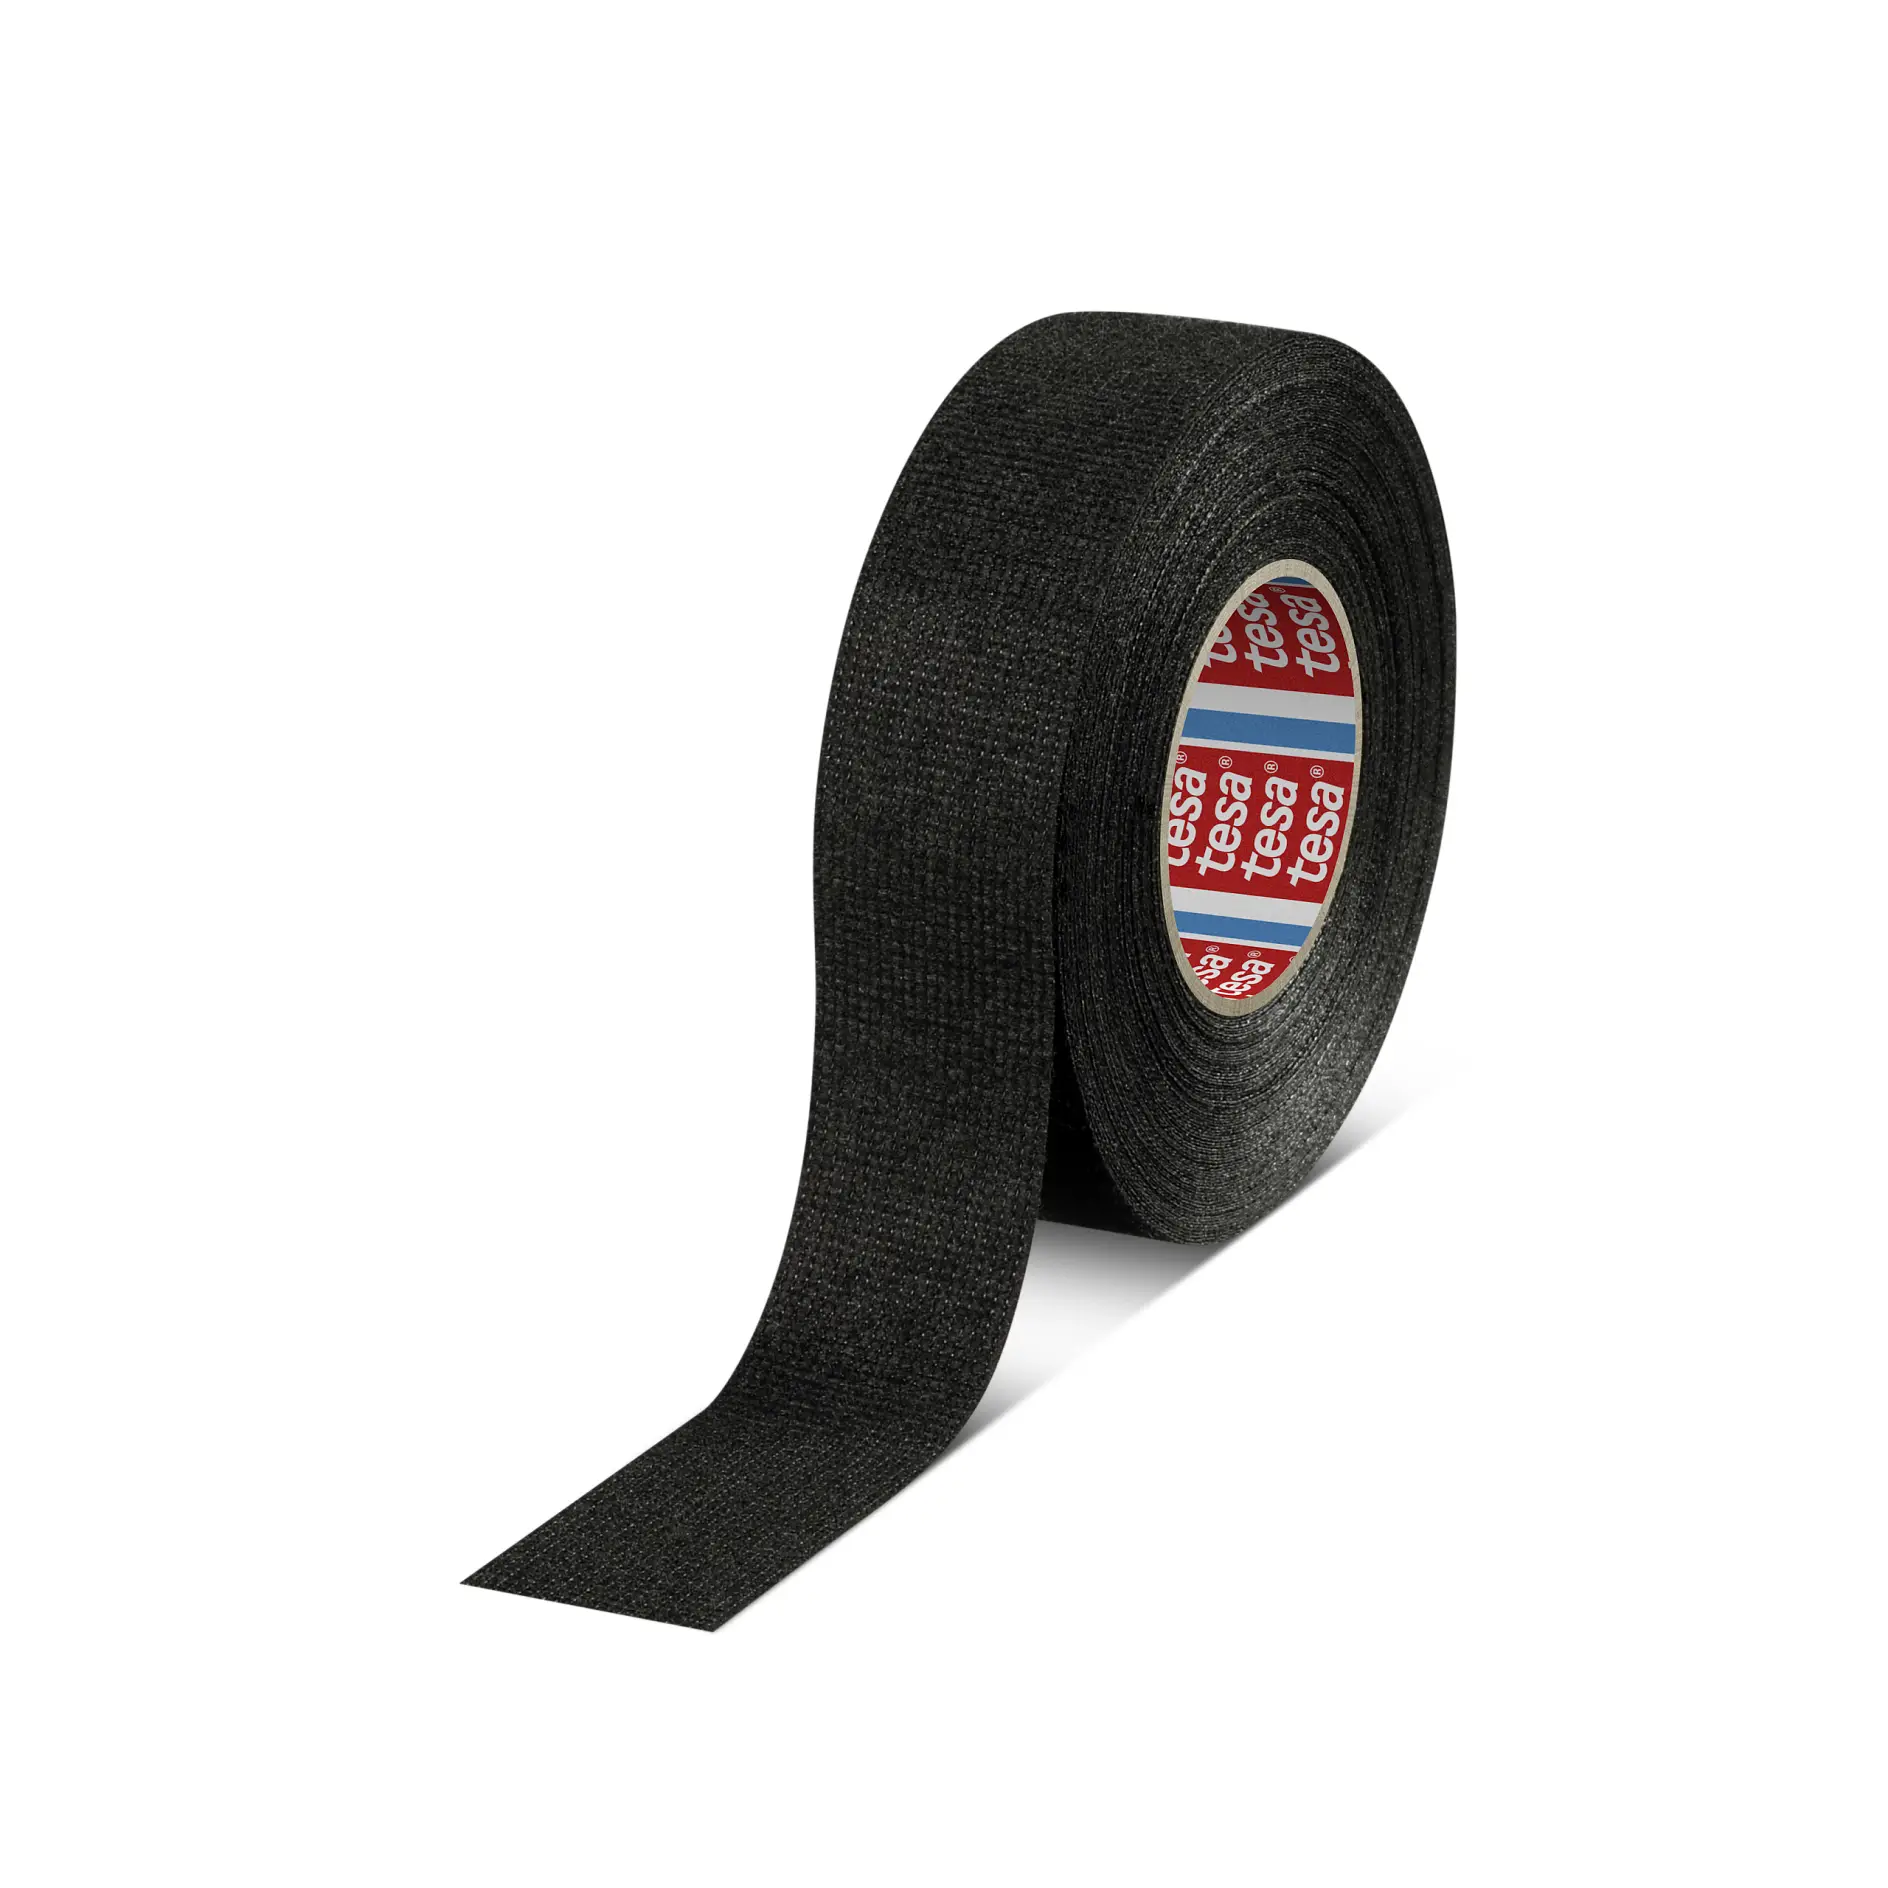 tesa-51608-pet-fleece-tape-flexibility-noise-damping-black-516080000700-pr